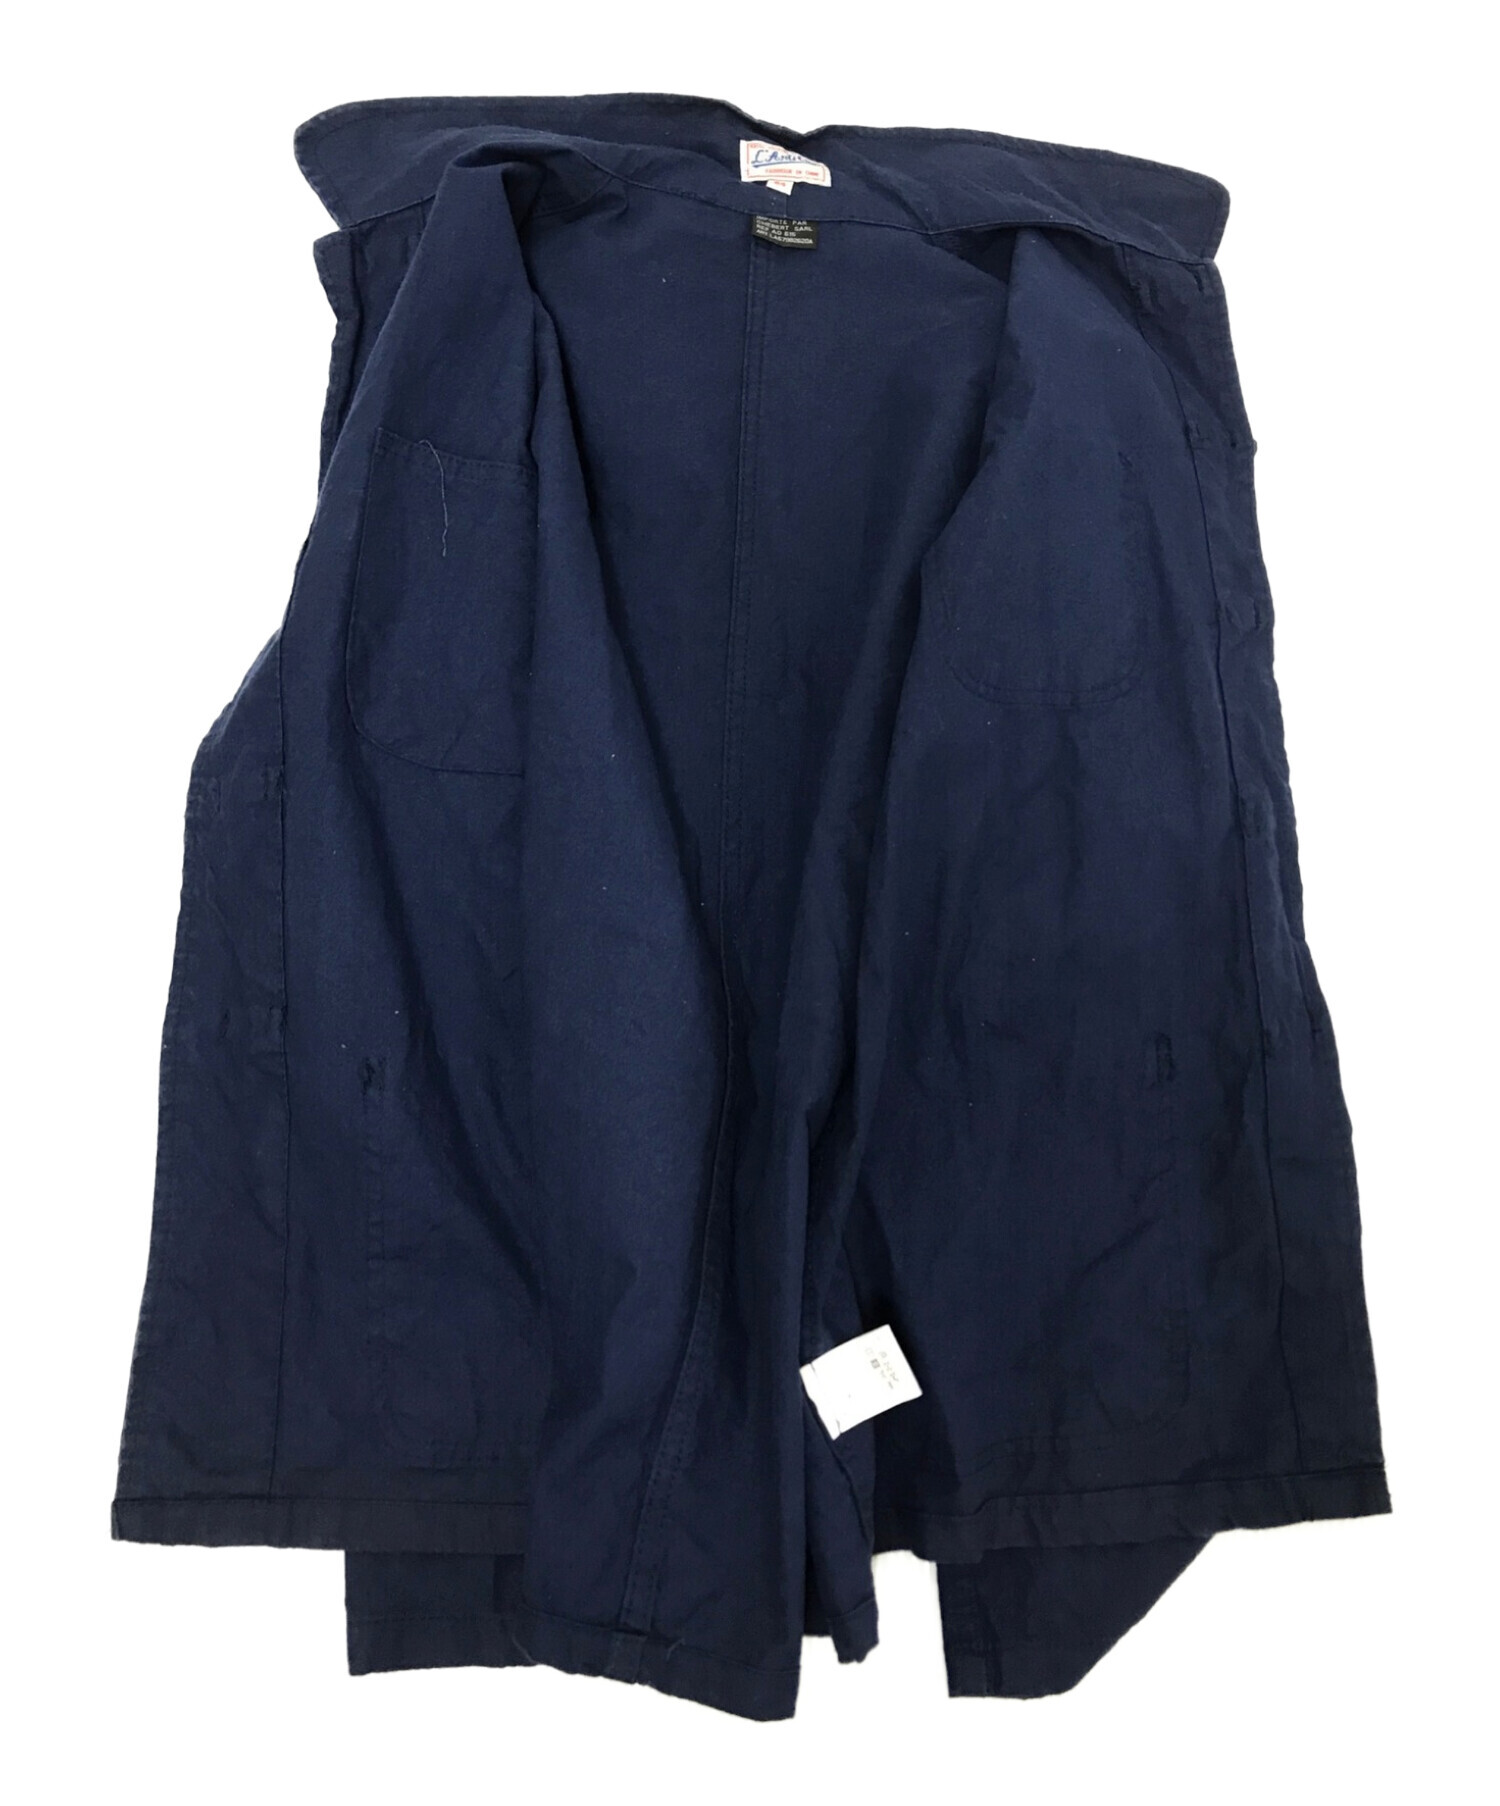 L'Anti cher (ランチシェール) フレンチワークチャイナジャケット ブルー サイズ:64